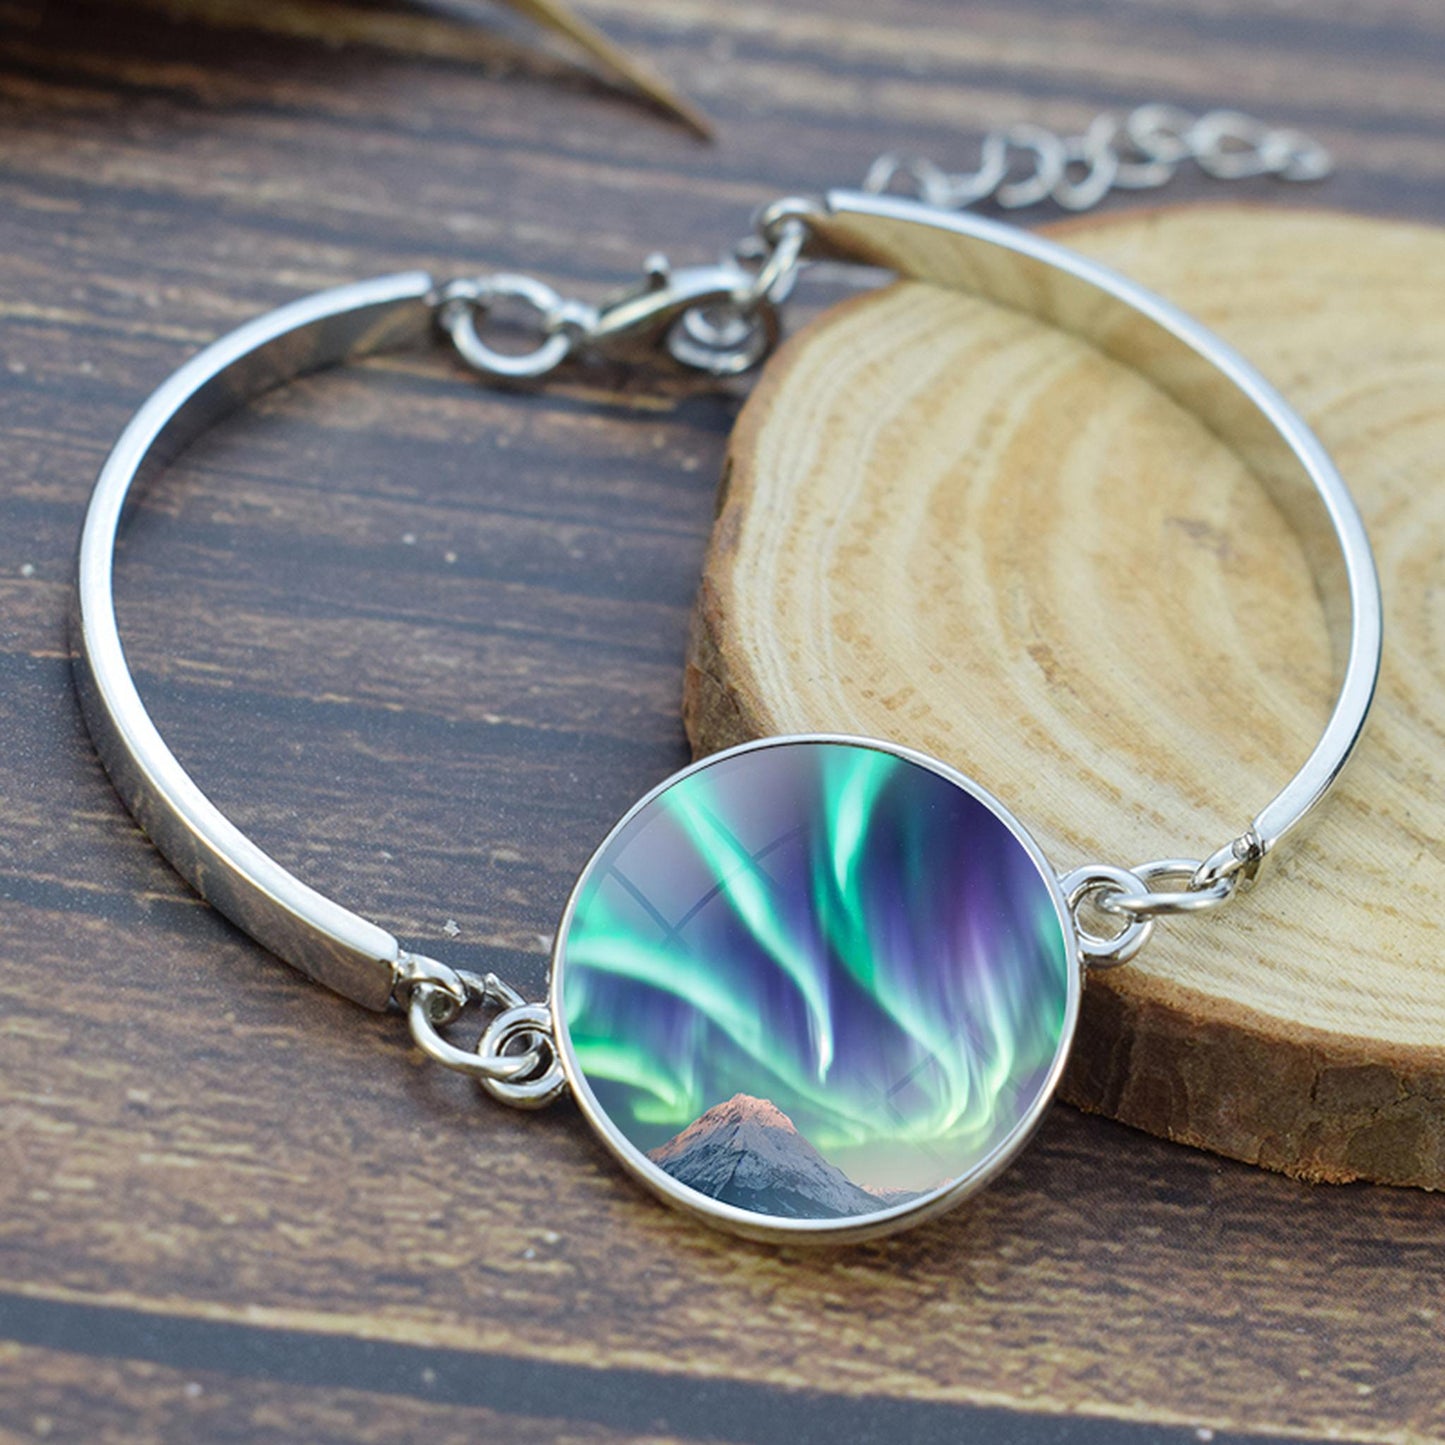 Unique Aurora Borealis Bangle Bracelet - Northern Light Jewelry - Glass Cabochon Silver Plated Bracelet - Perfect Aurora Lovers Gift 1